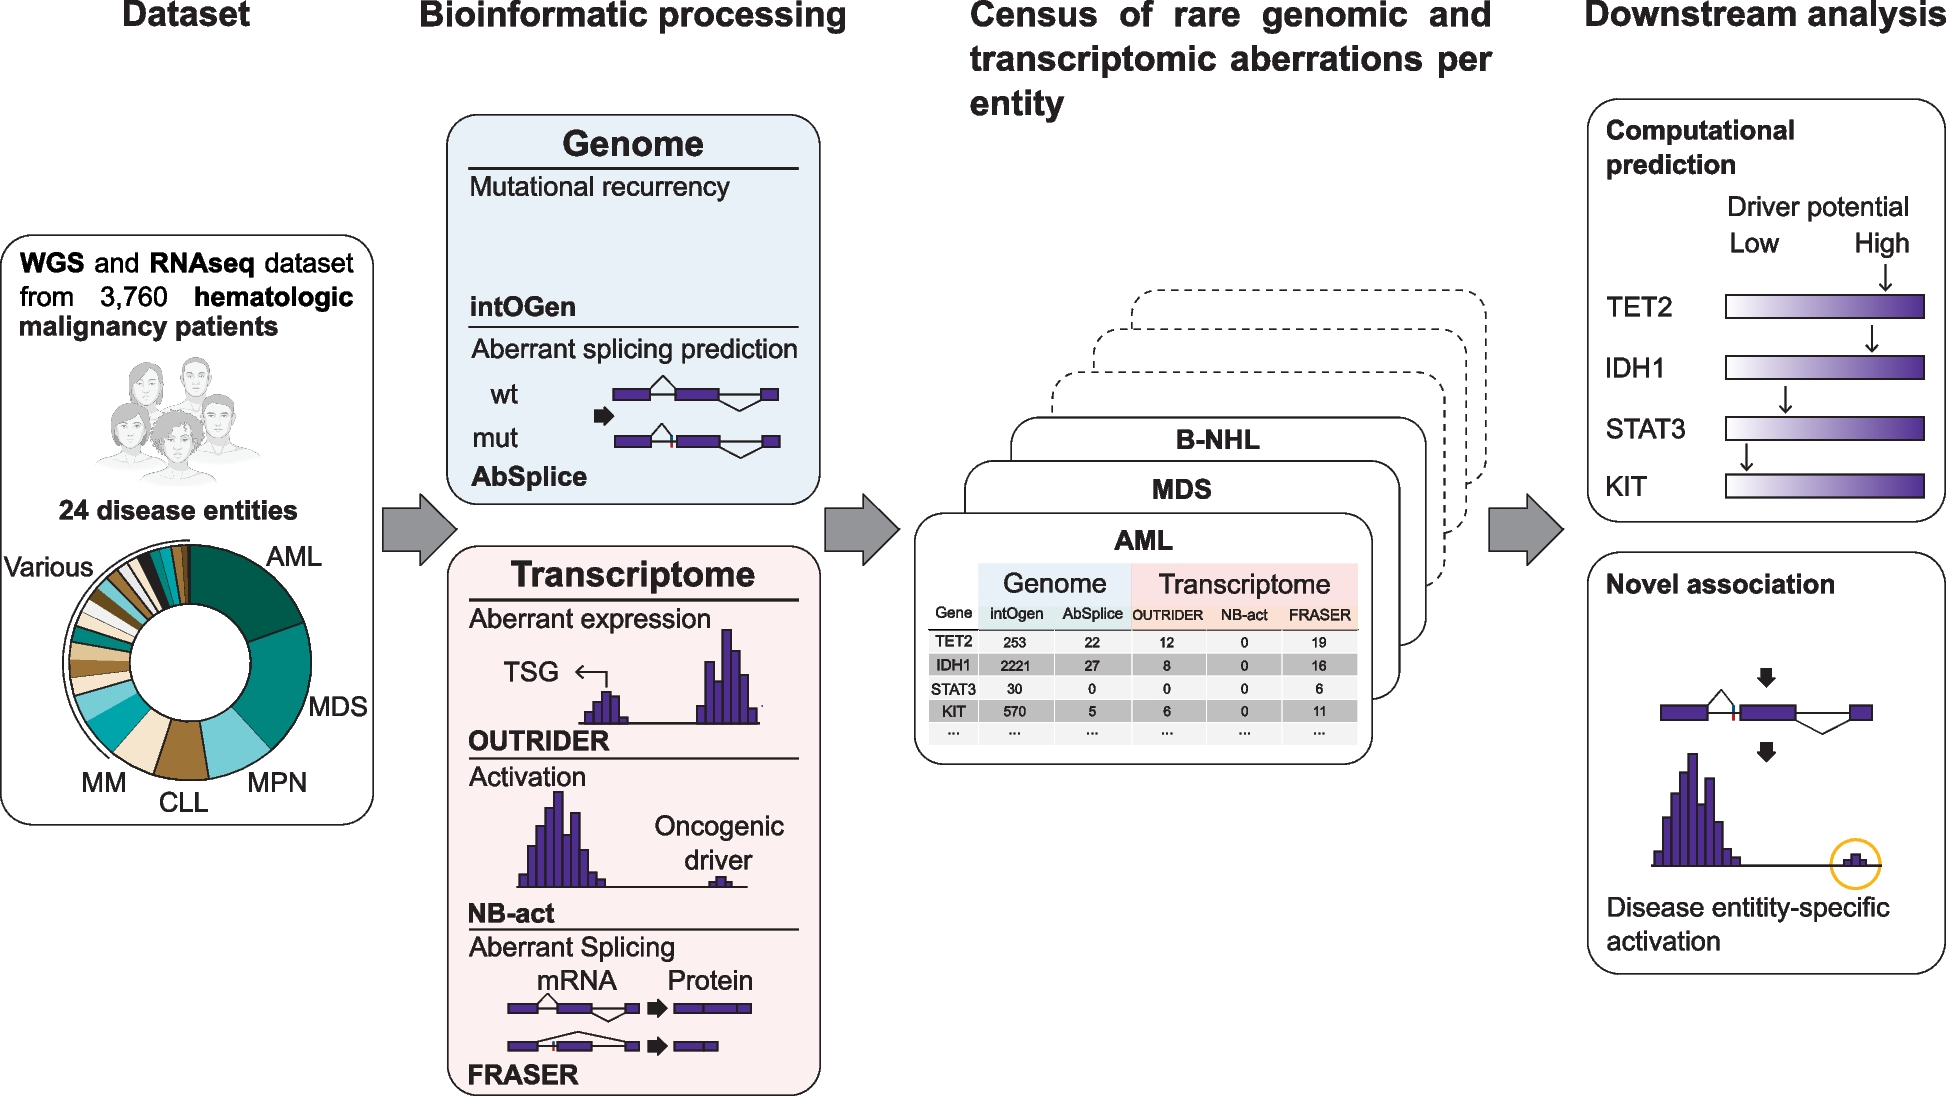 Analysis of 3760 hematologic malignancies reveals rare transcriptomic aberrations of driver genes